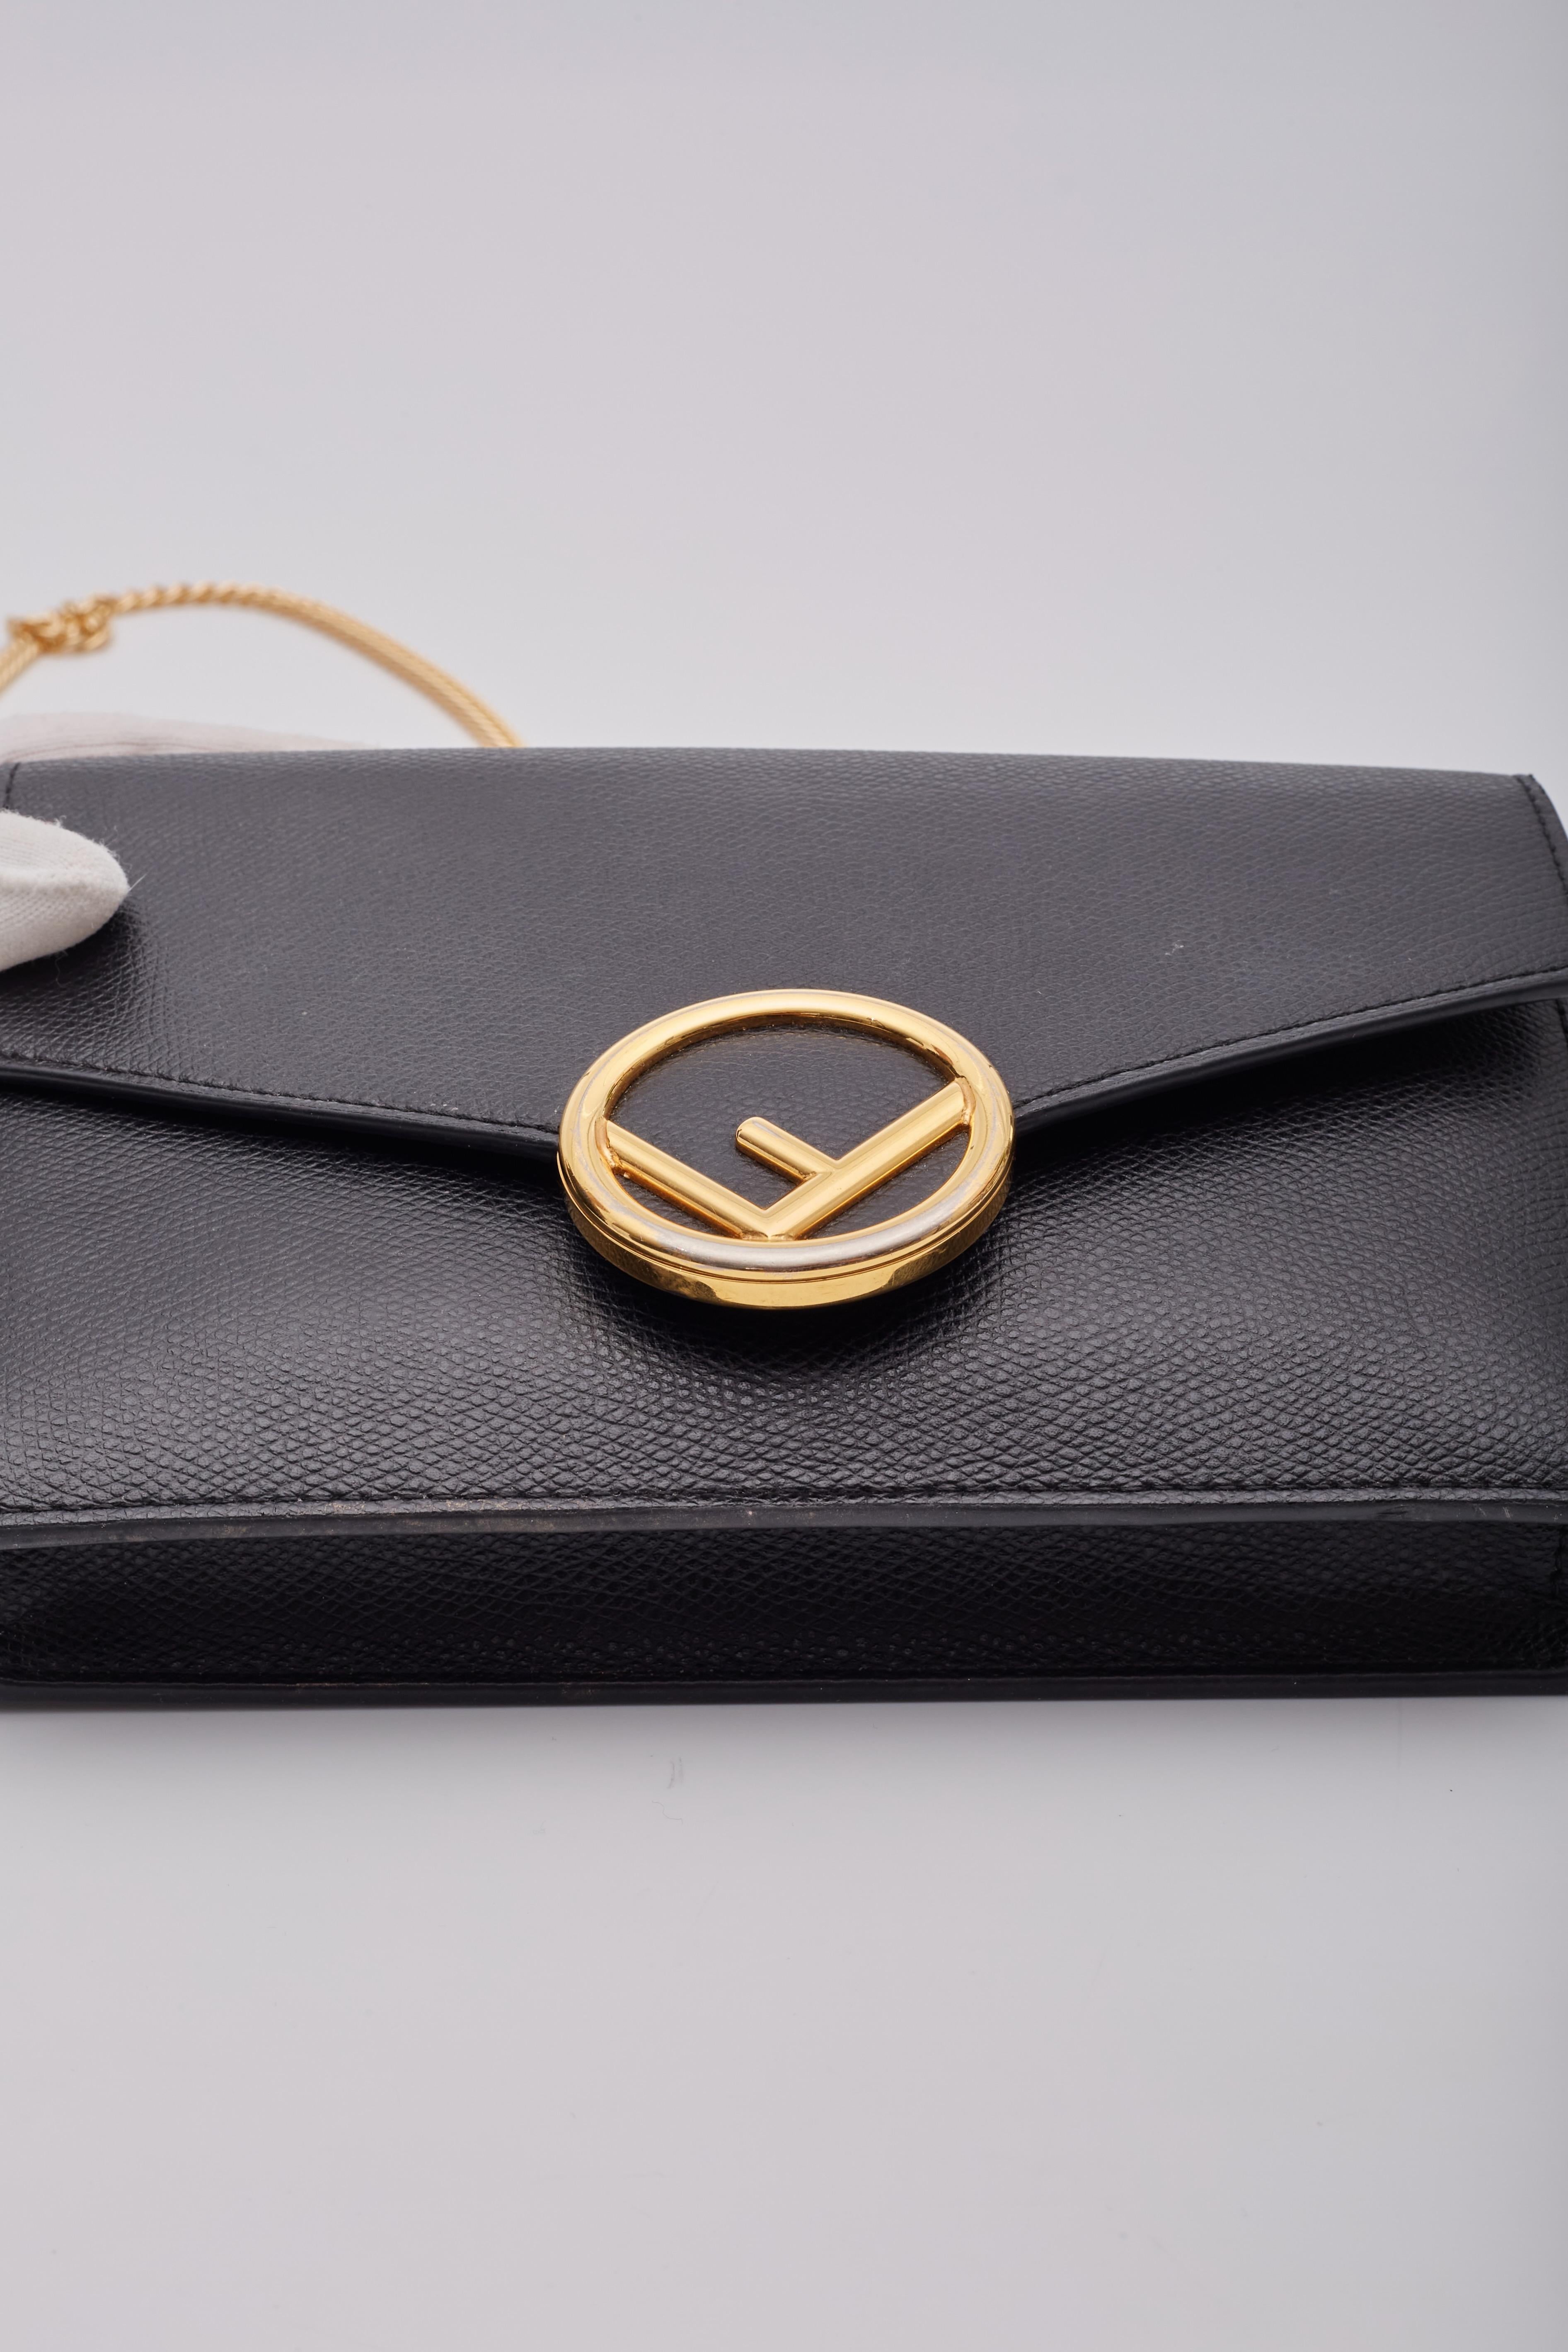 Fendi Black Leather F Logo Wallet On Chain Bag For Sale 3